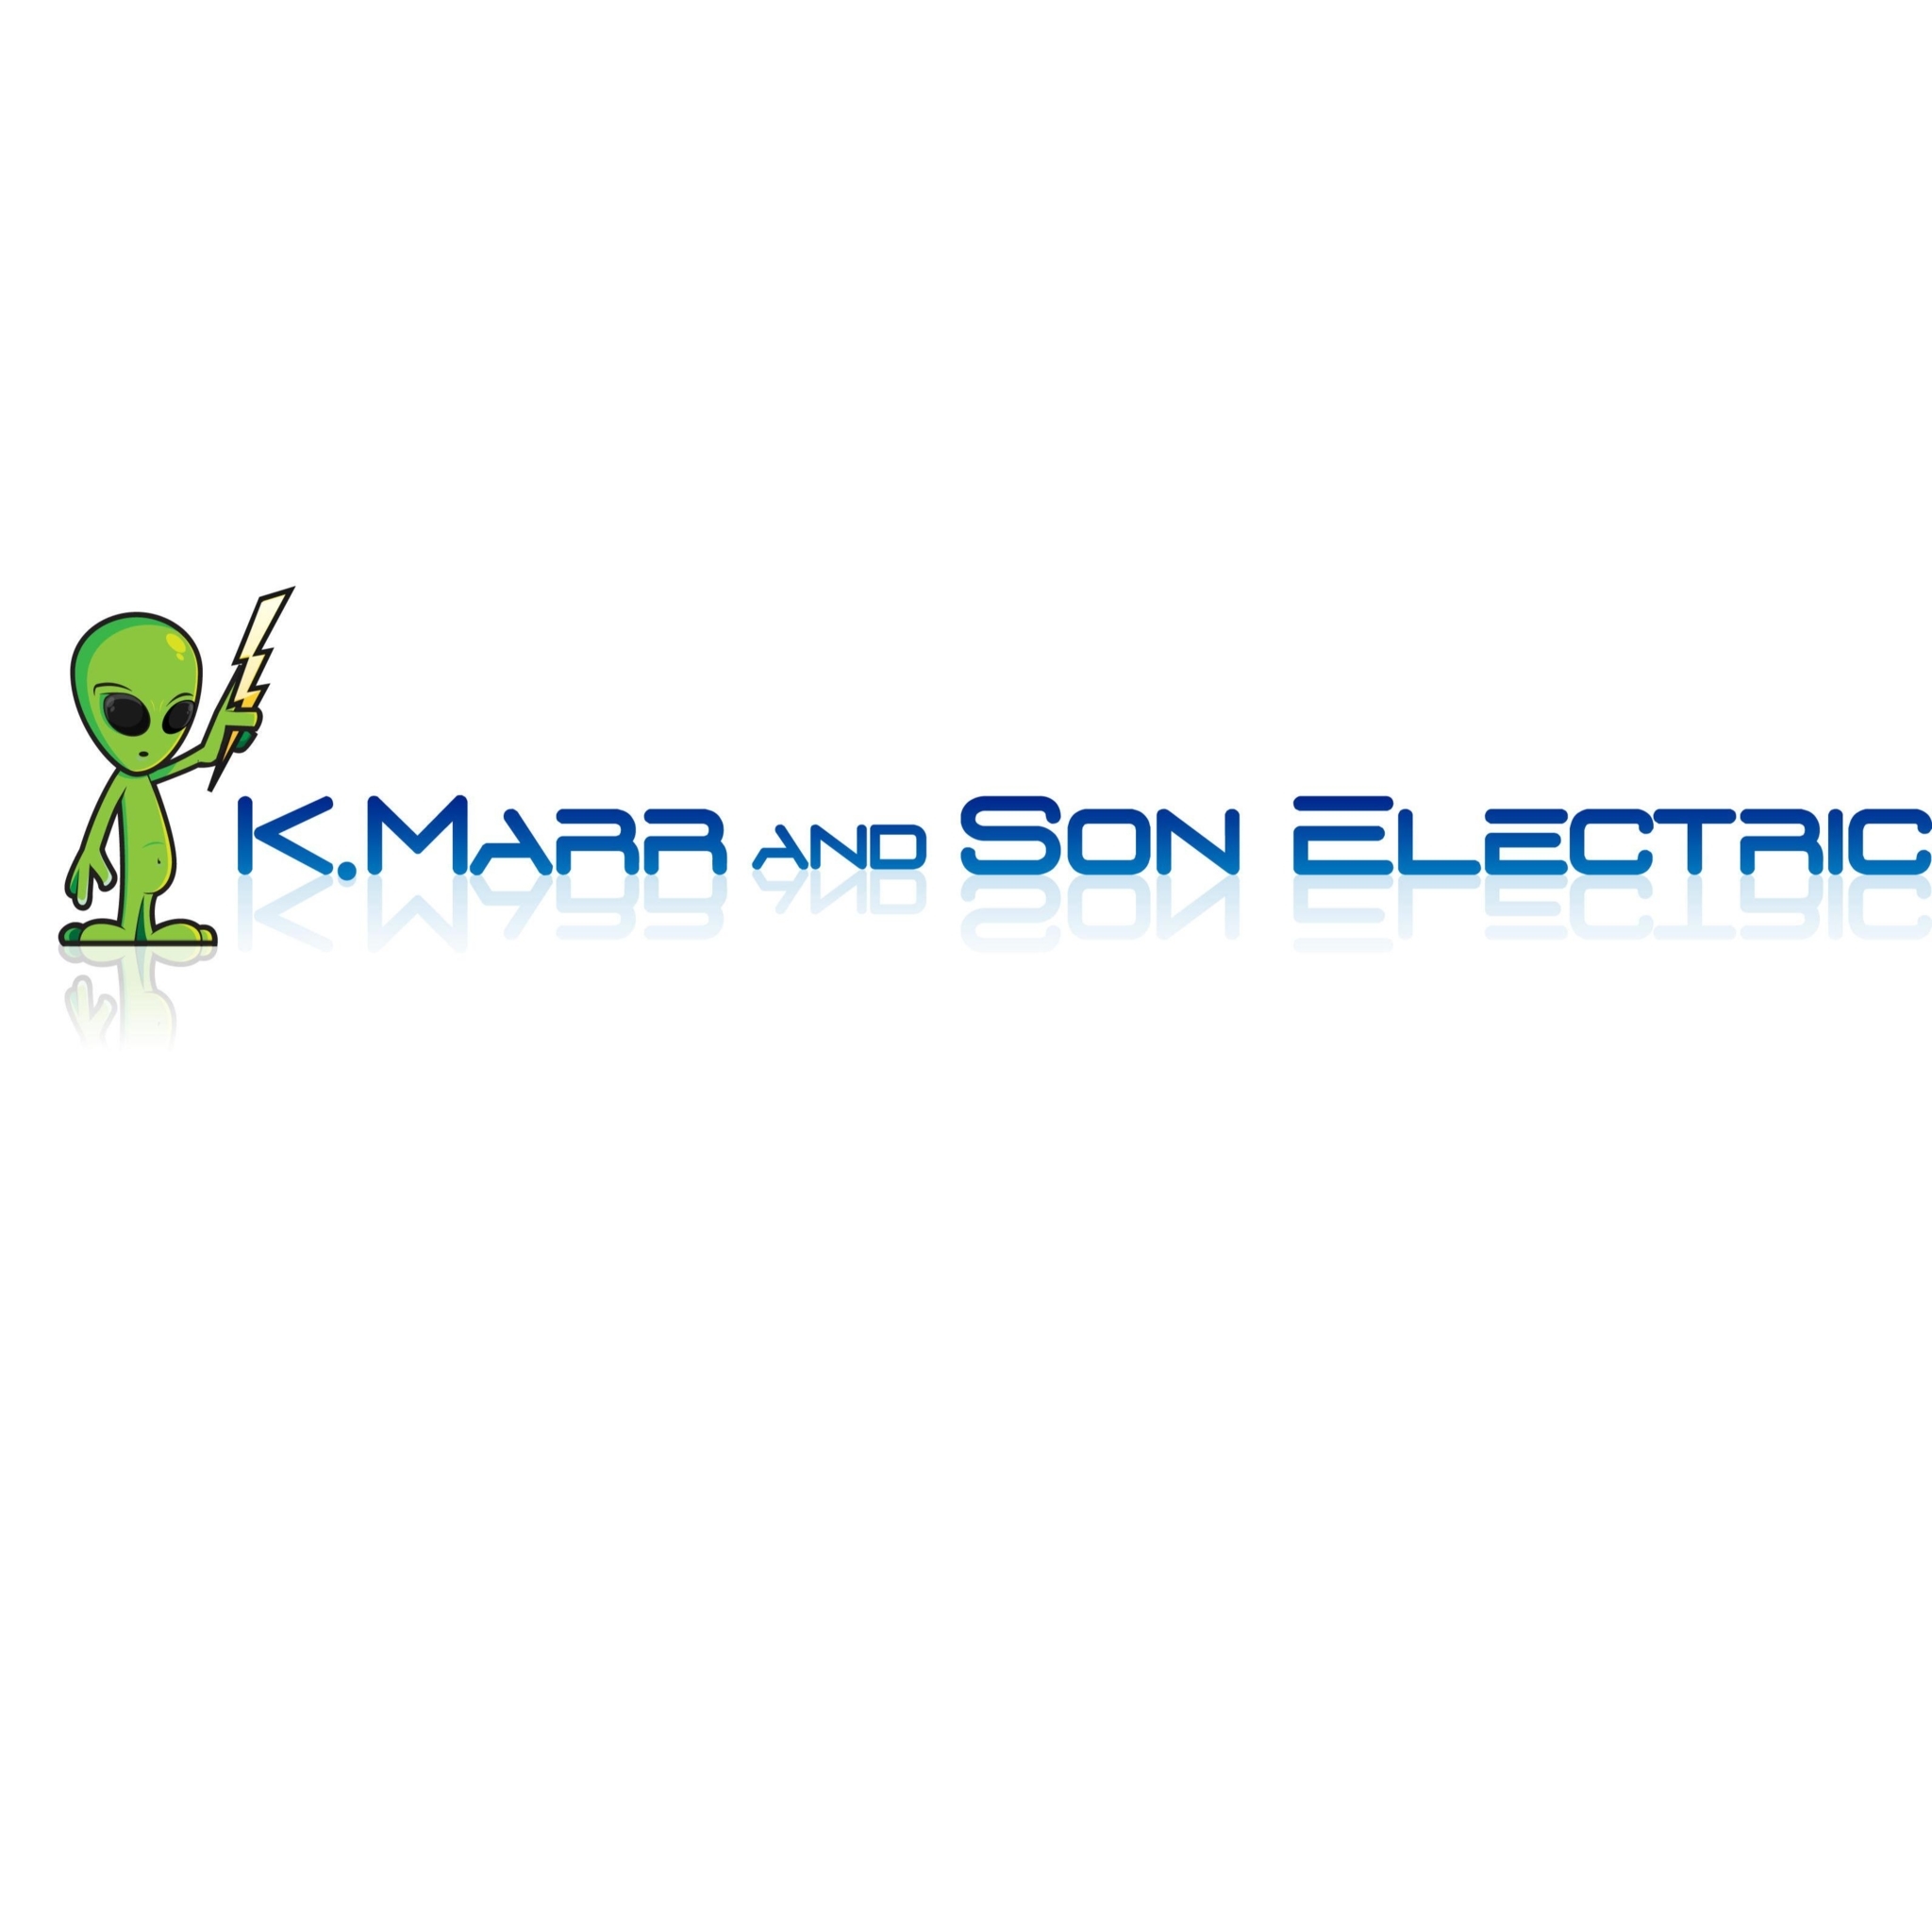 K.MARR AND SON ELECTRIC - Électriciens